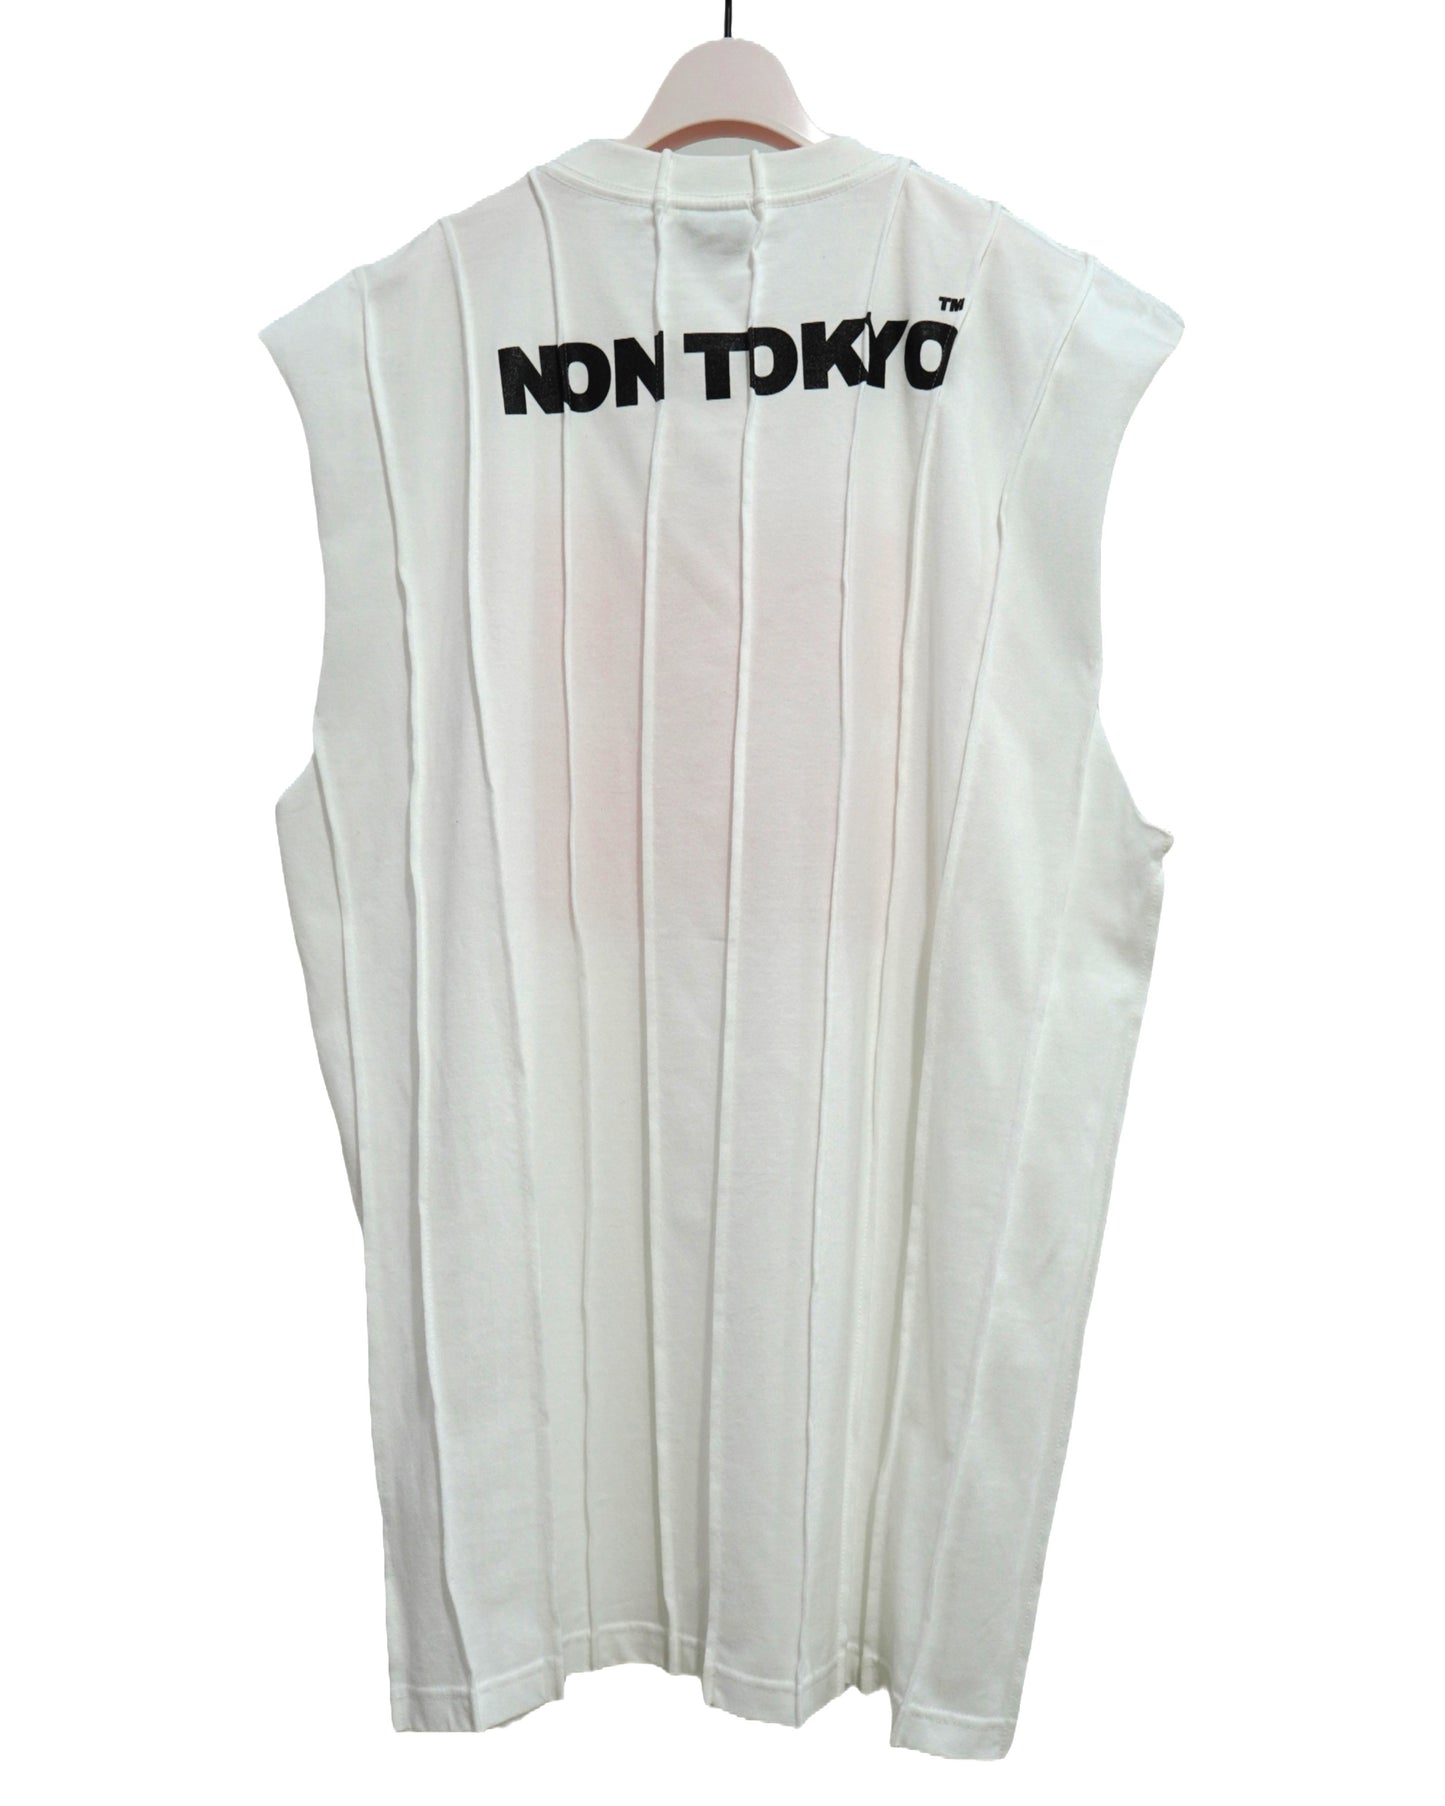 NON TOKYO /  PIN TUCK C/S (BASKETBALL / WHITE) / 〈ノントーキョー〉ピンタックカットソー (バスケットボール / ホワイト)